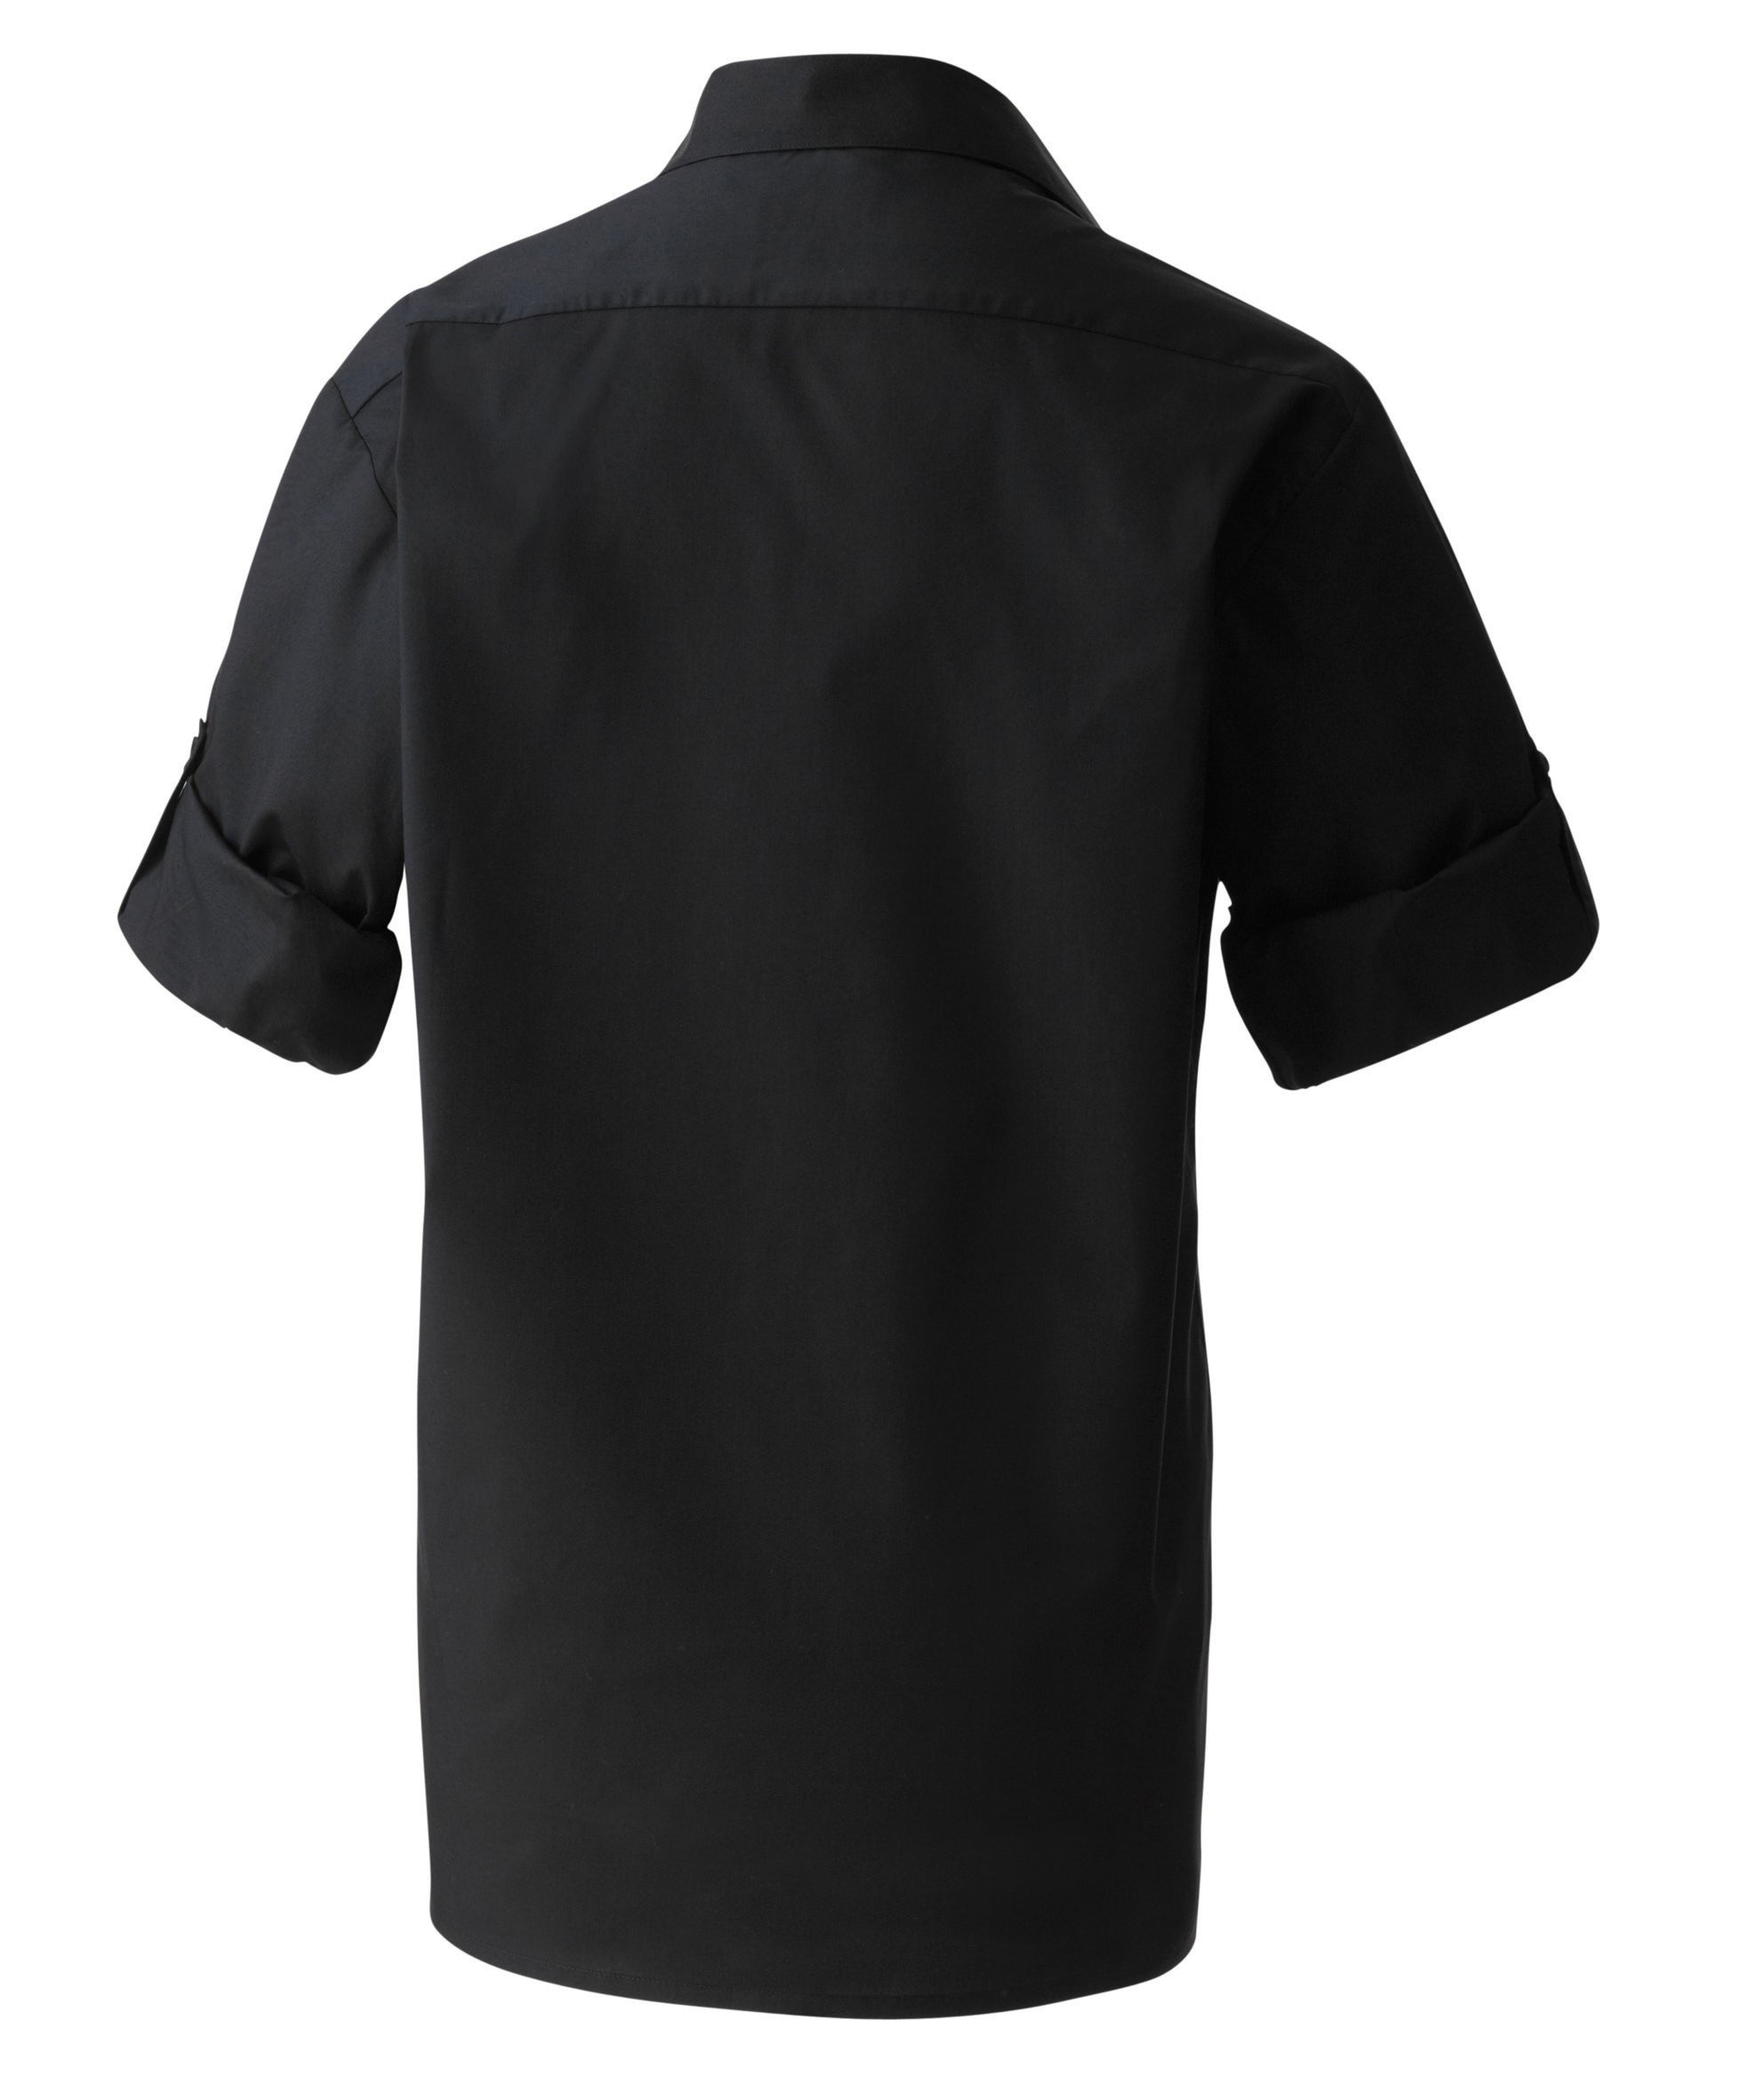 Roll sleeve poplin shirt- Premier Collection